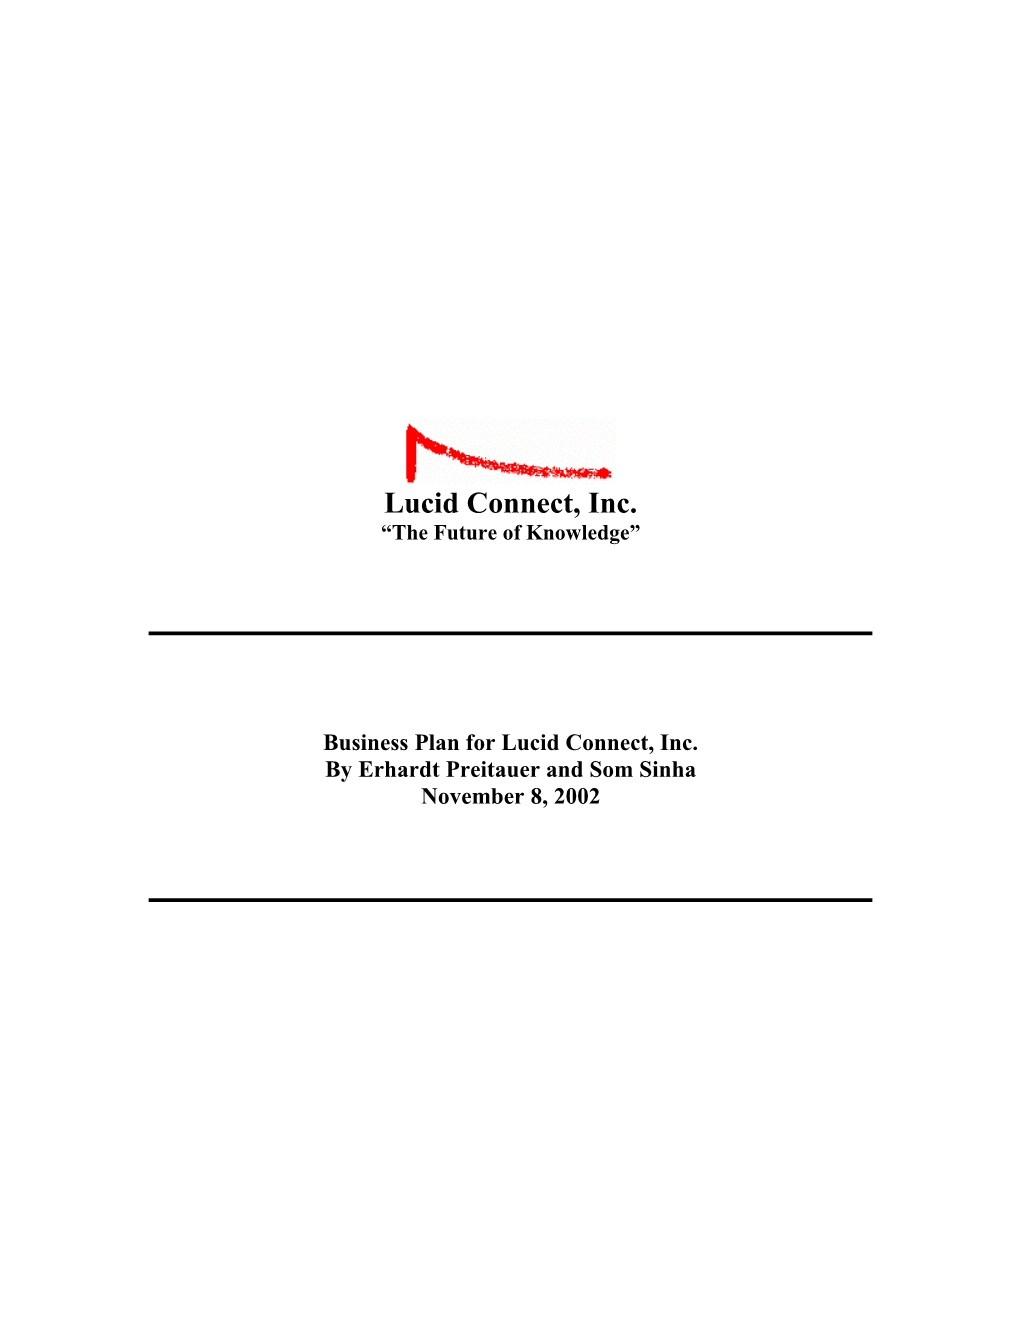 Lucid Connect, Inc. Business Plan